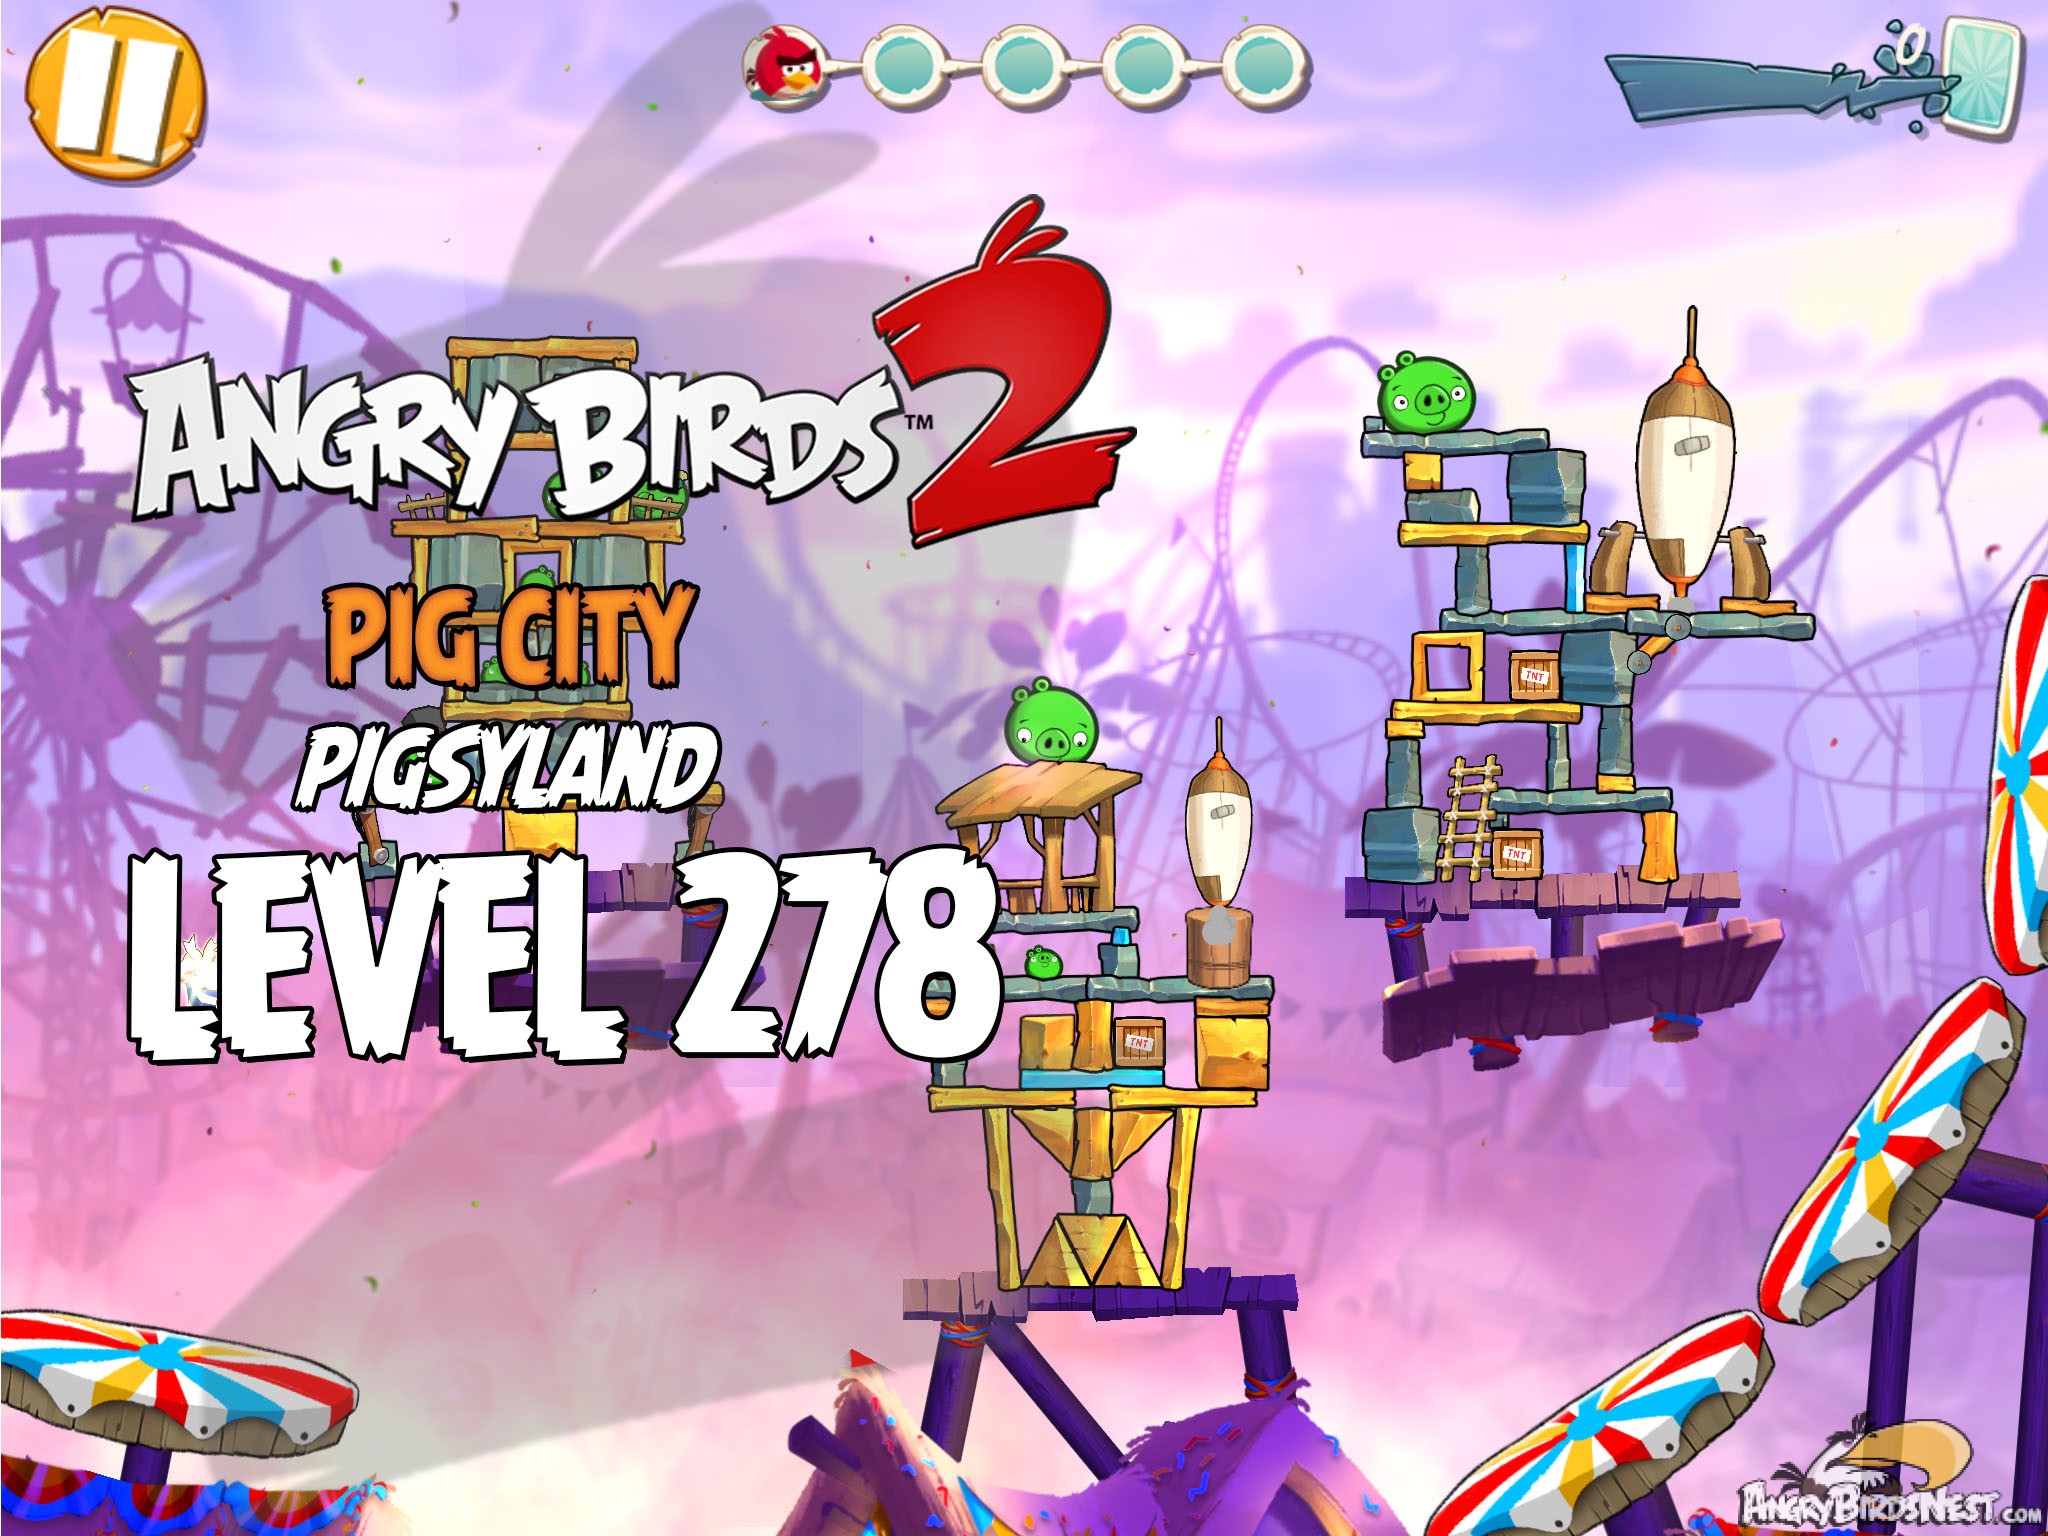 Angry Birds 2 Pig City Pigsyland Level 278